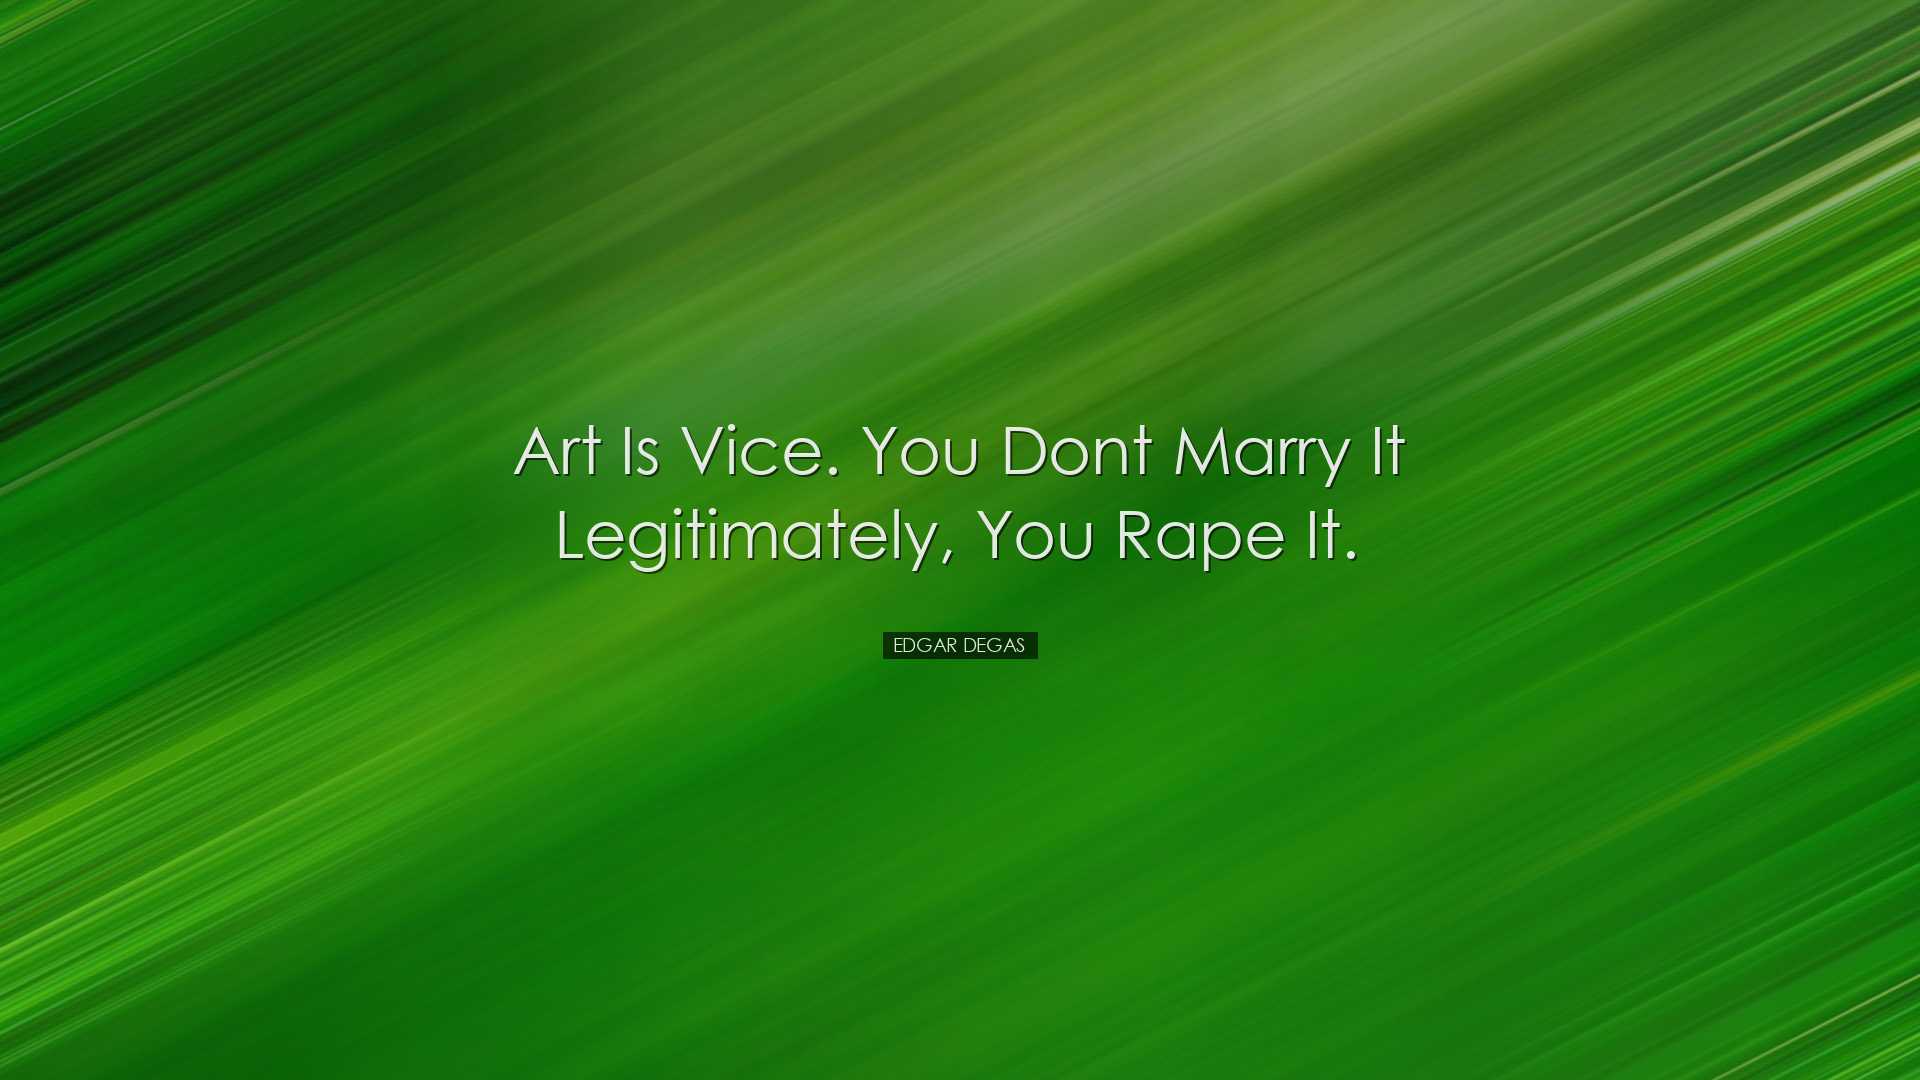 Art is vice. You dont marry it legitimately, you rape it. - Edgar